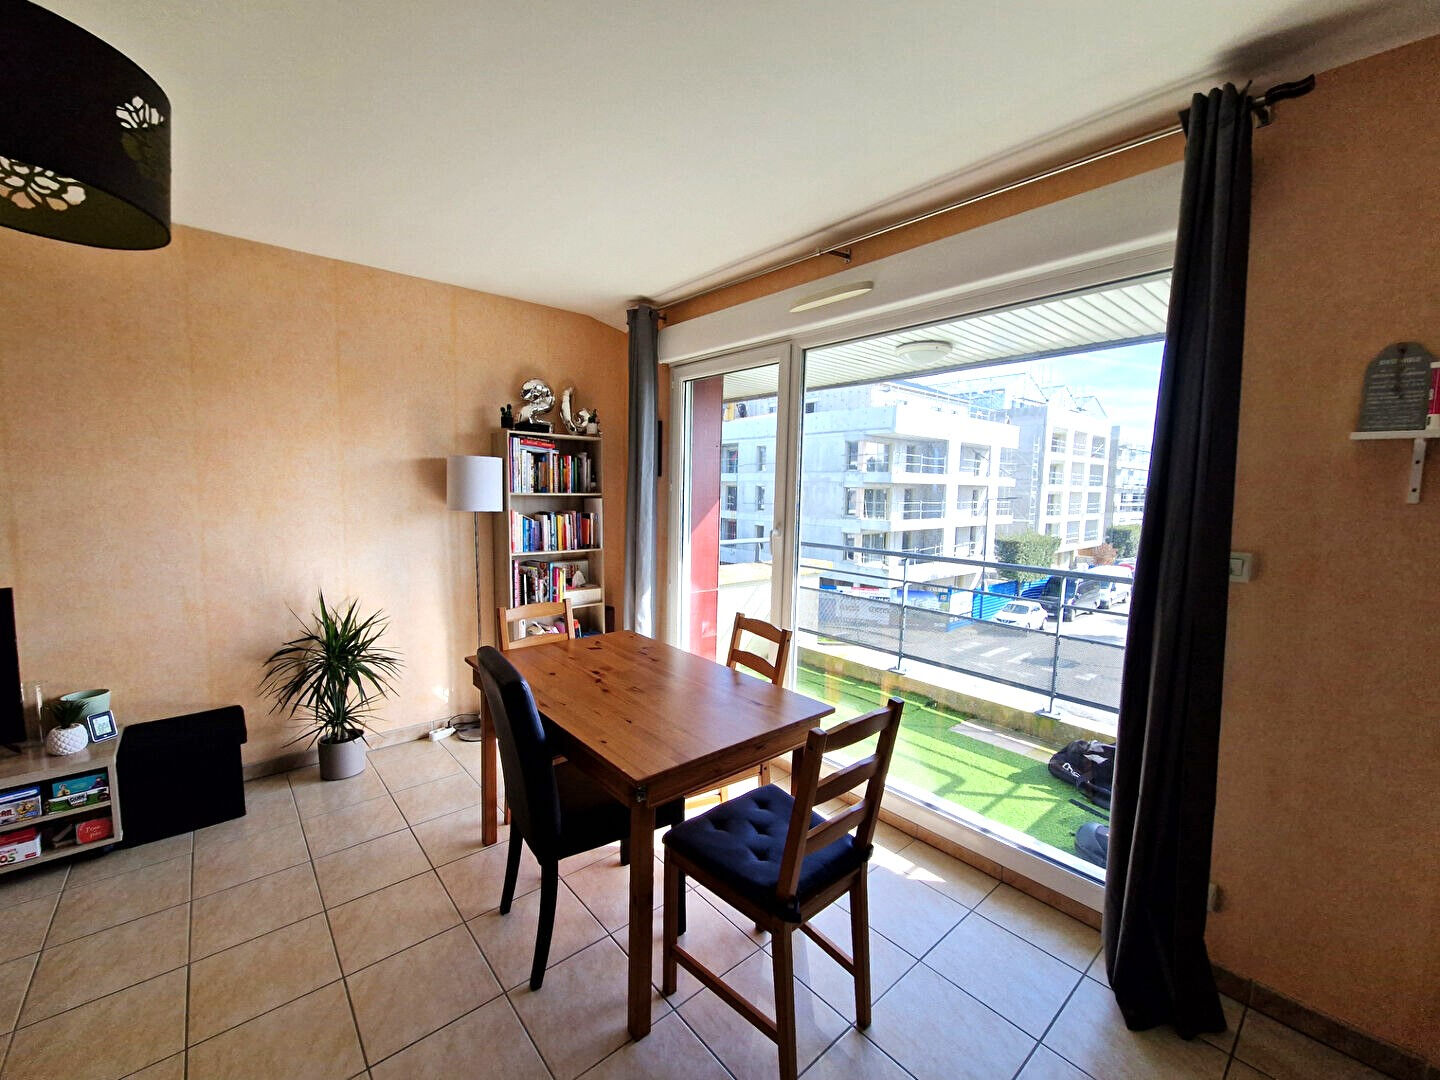 Appartement 2 pièces - 55 m² environ - 55400622d.jpg | Kermarrec Habitation